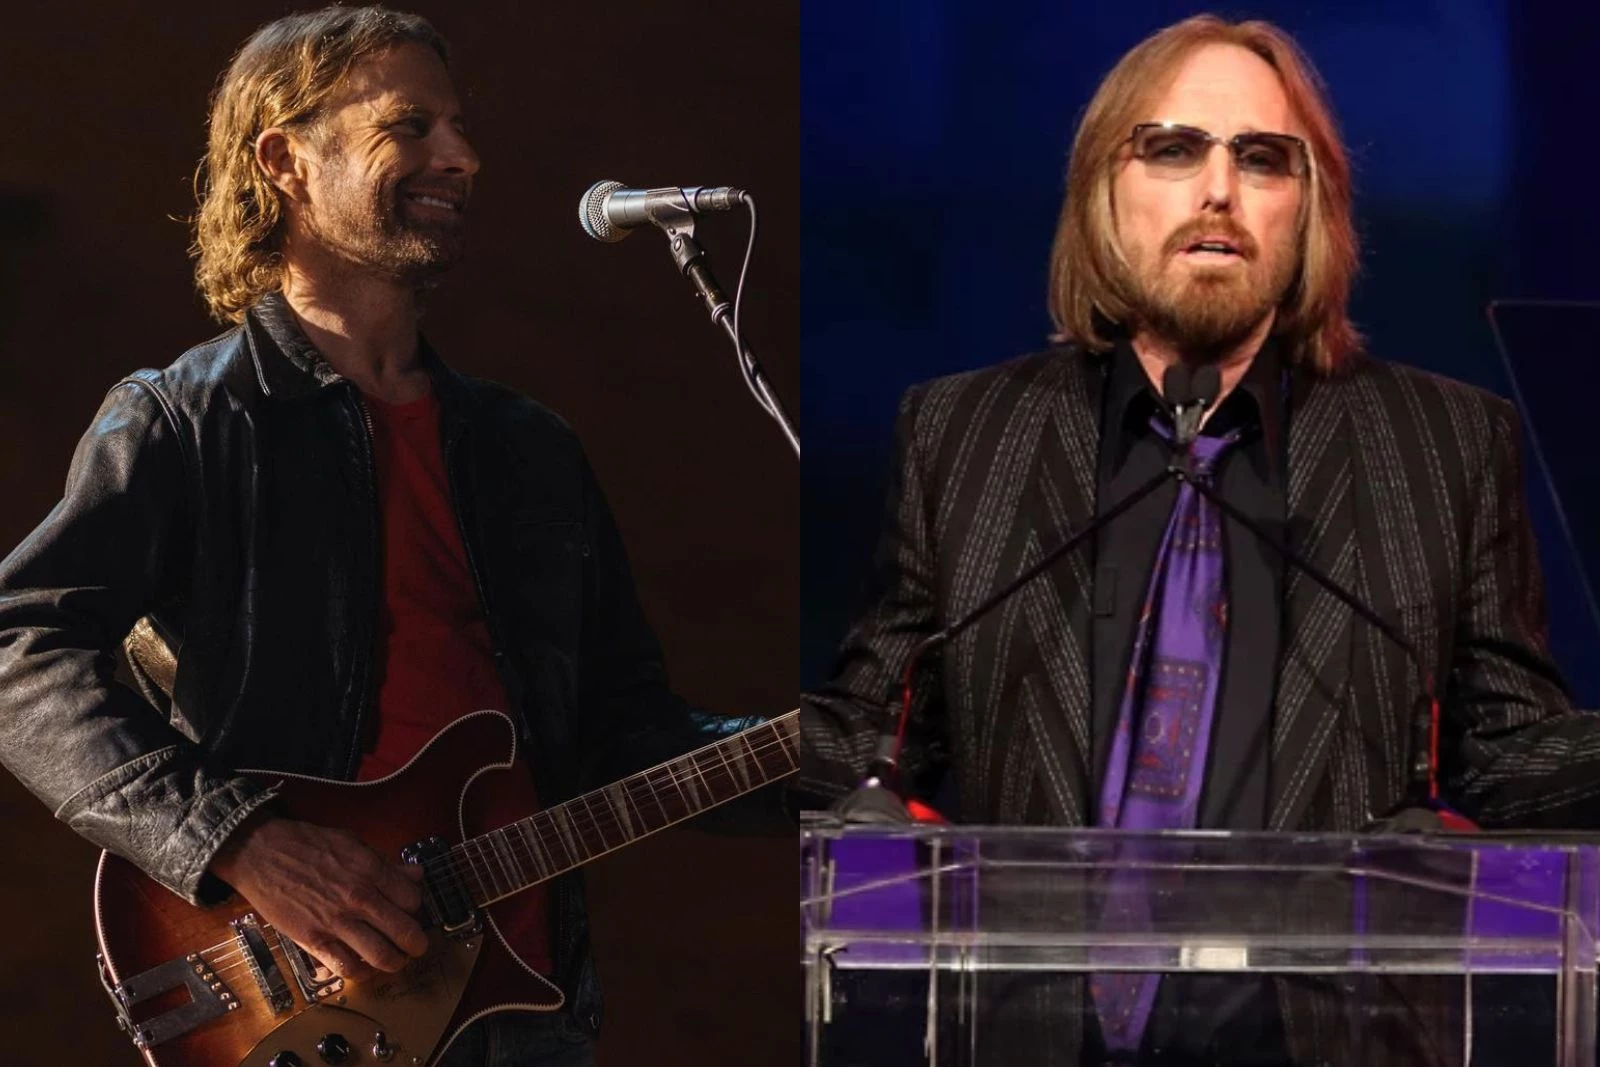 Watch Dierks Bentley Play 'American Girl' With Tom Petty's Guitar